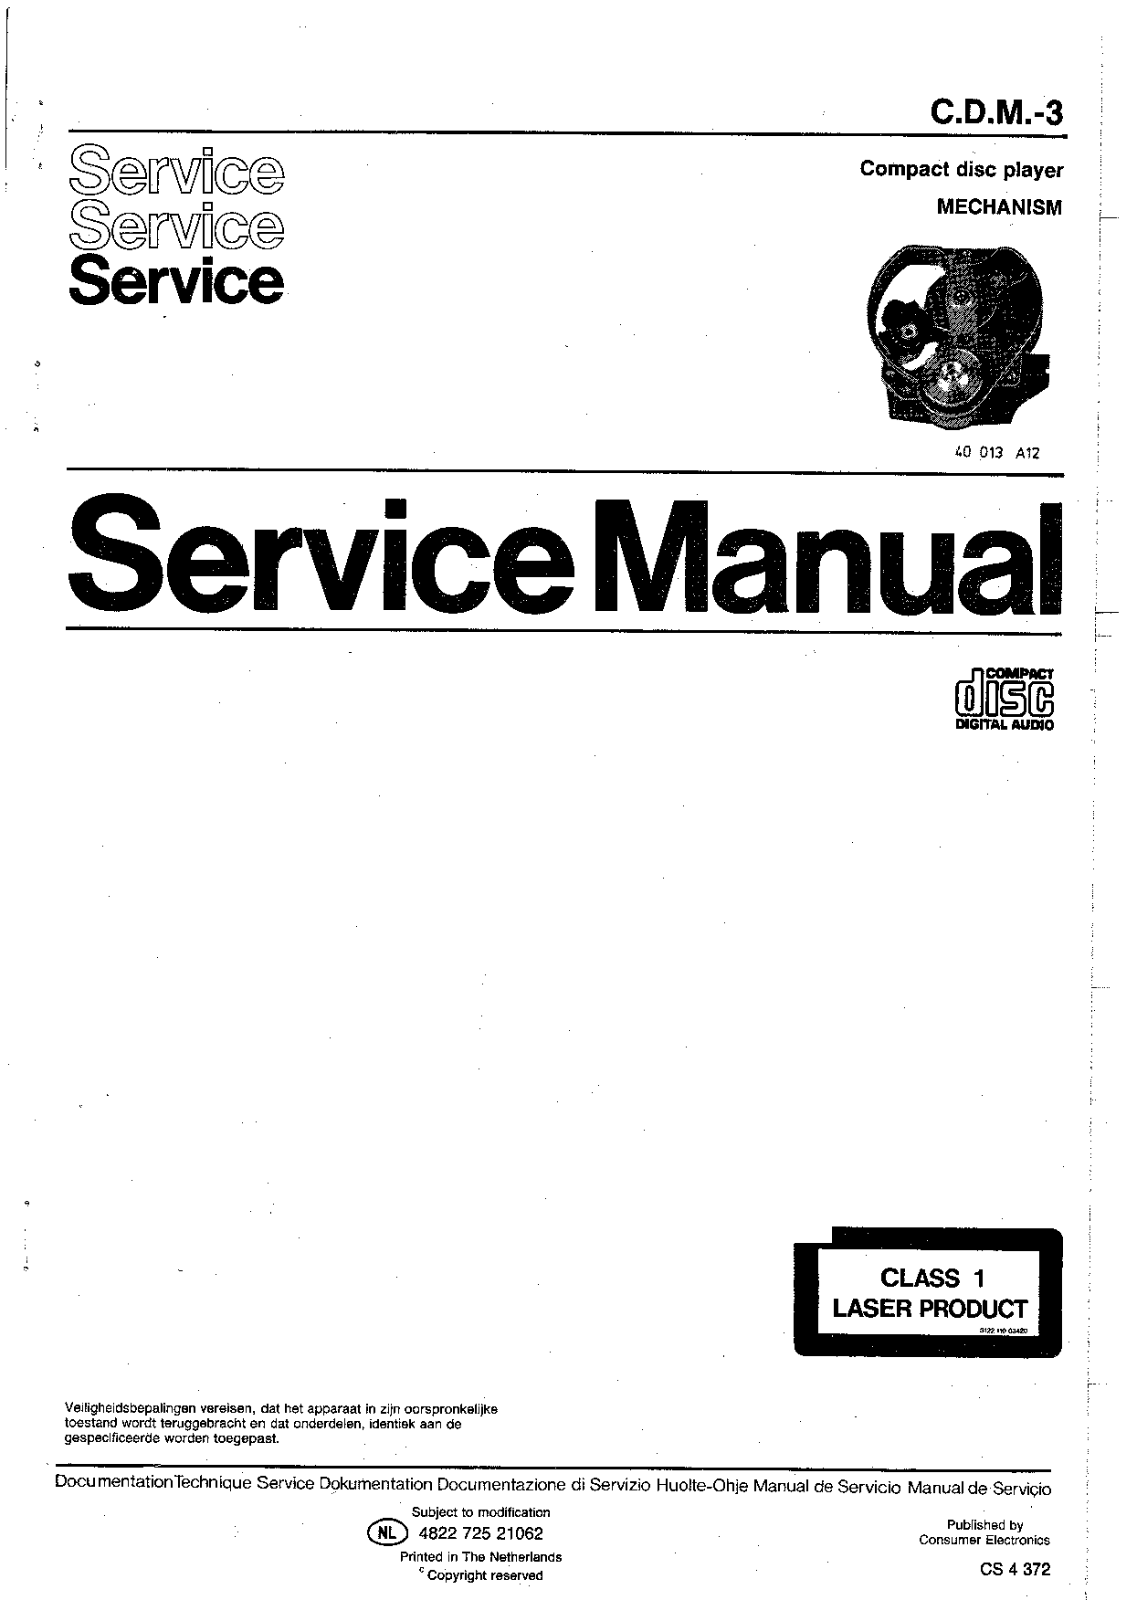 Philips C.D.M.3 Service Manual